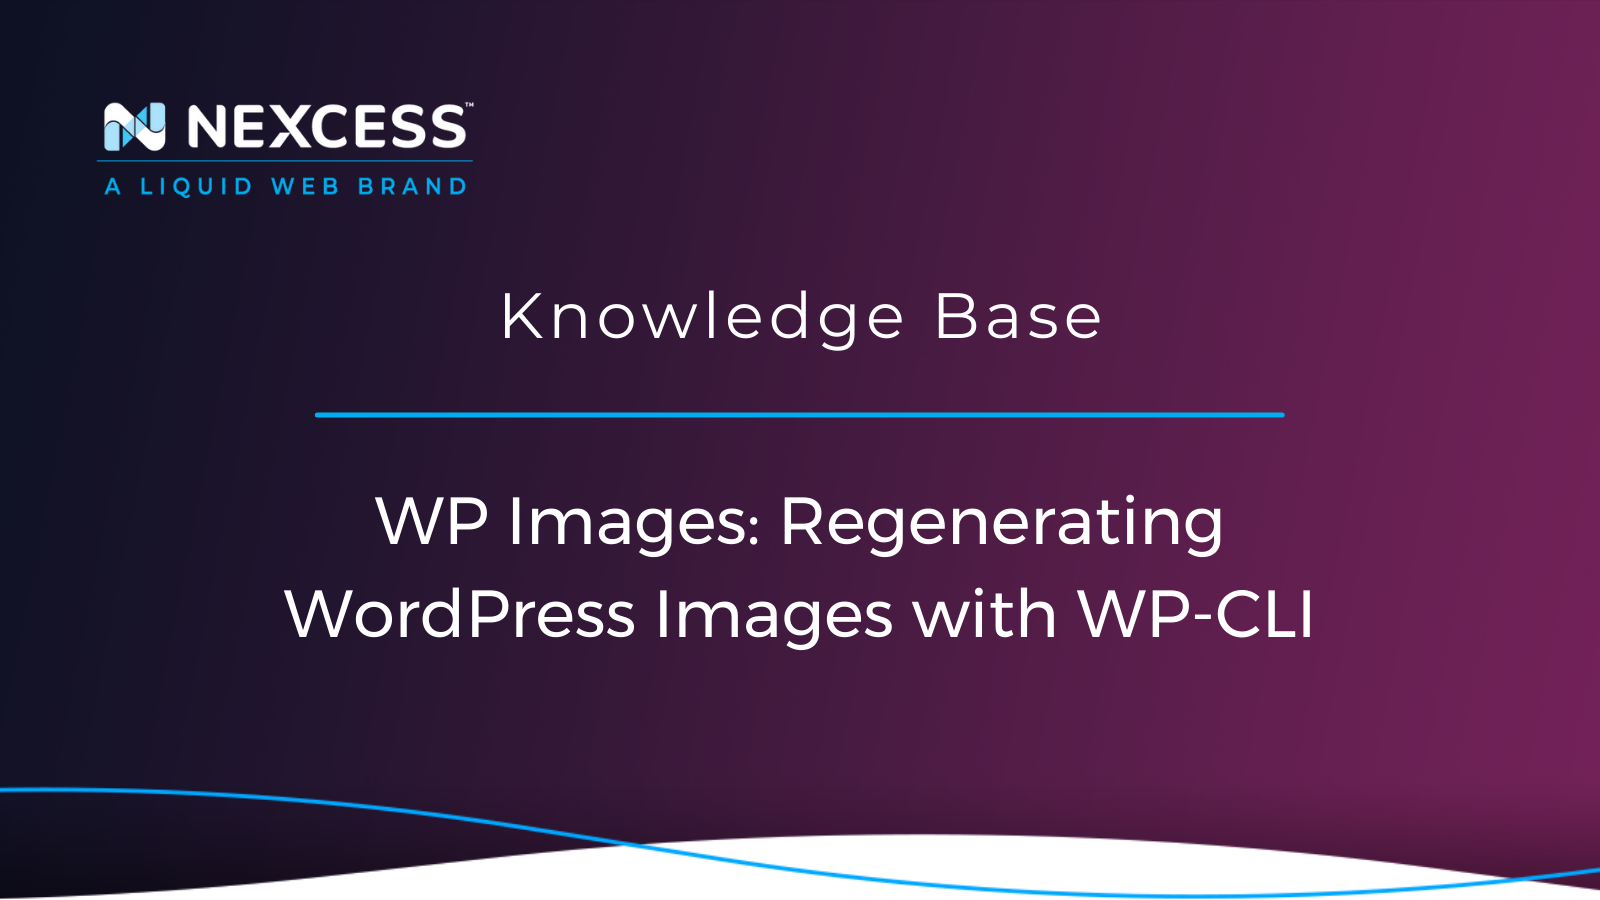  WP Images: Regenerating WordPress Images with WP-CLI